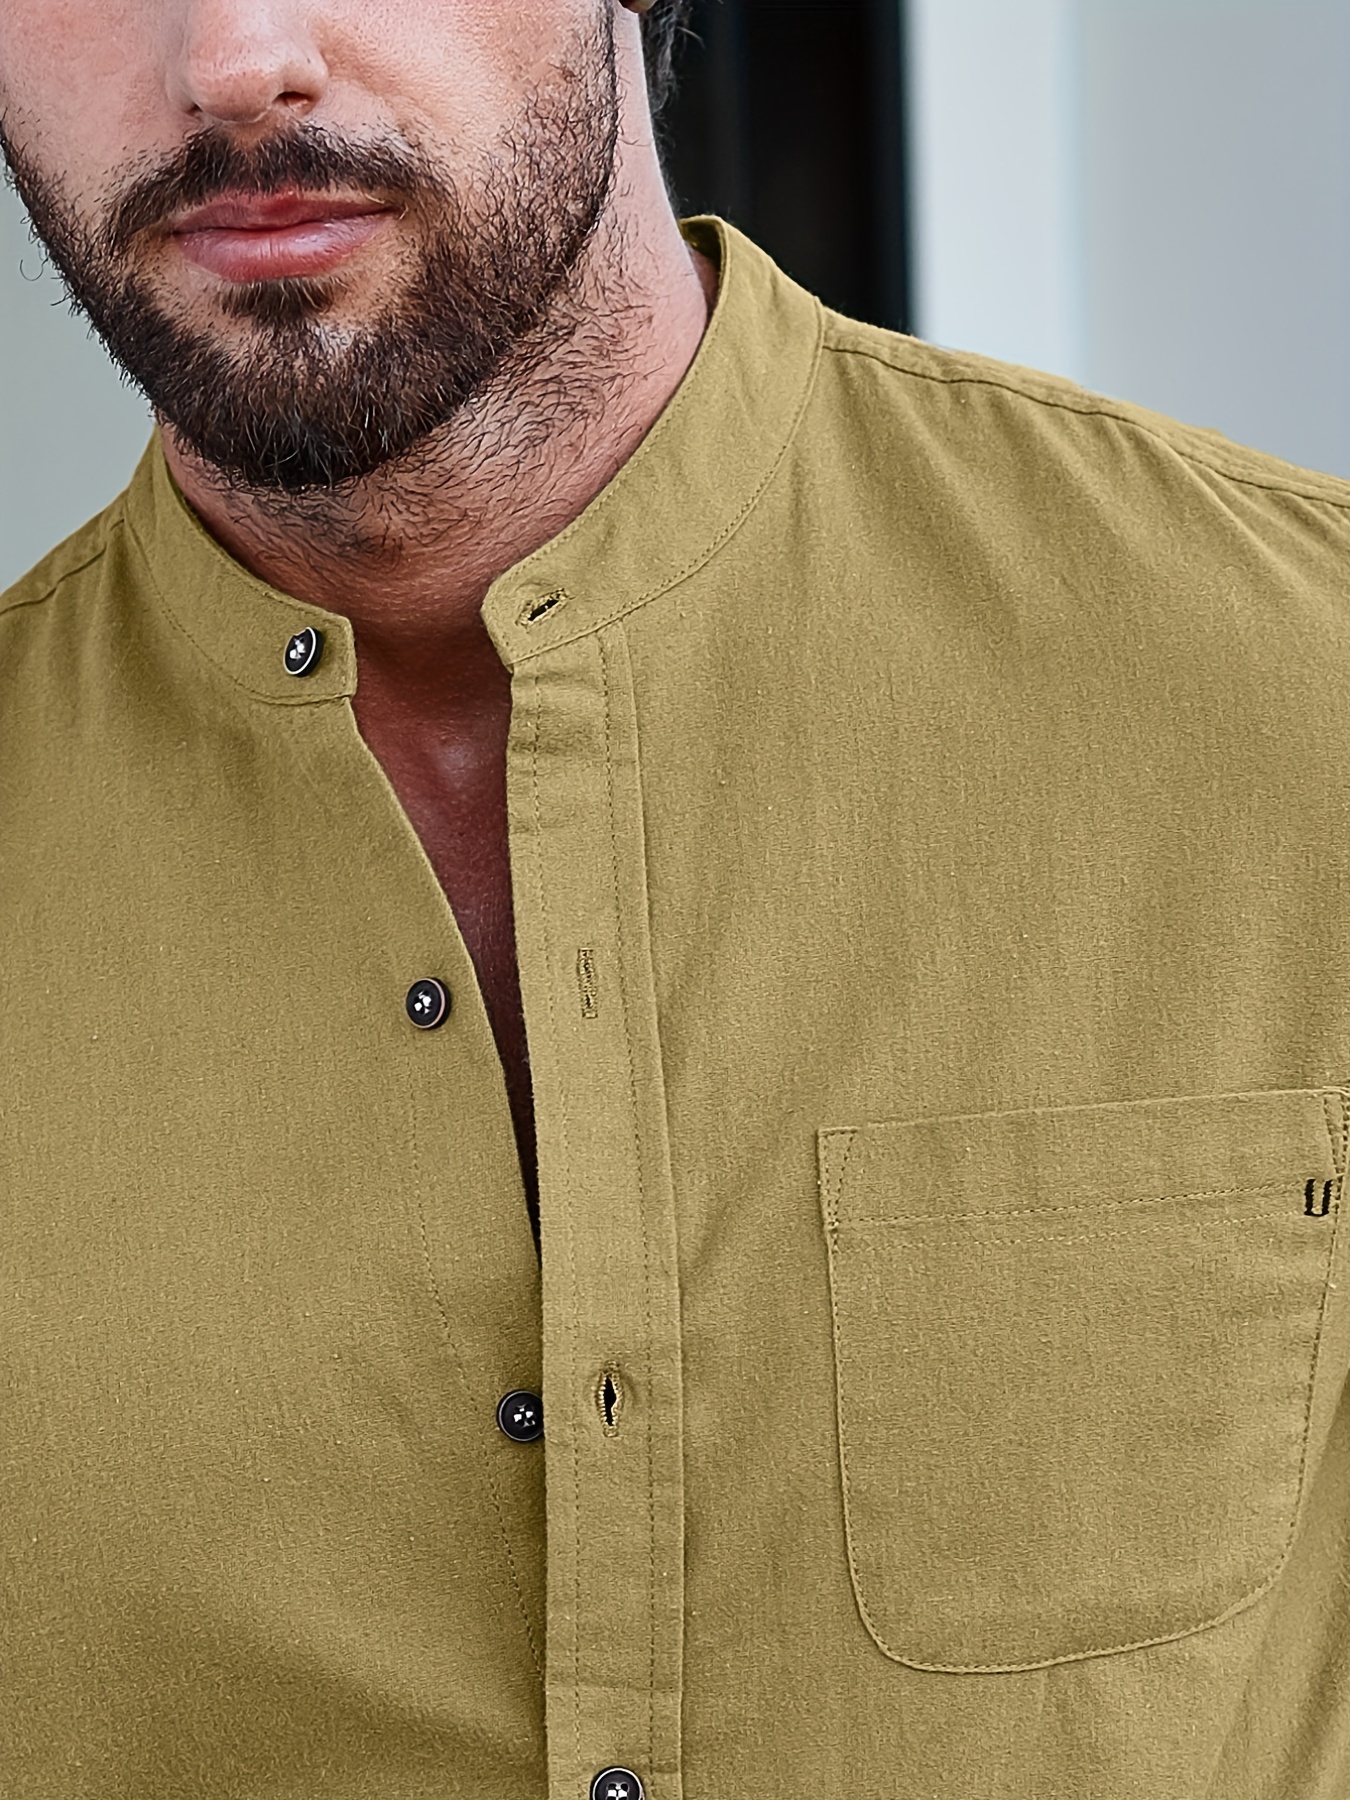 Long Sleeve Button Shirt Images – Browse 8,114 Stock Photos